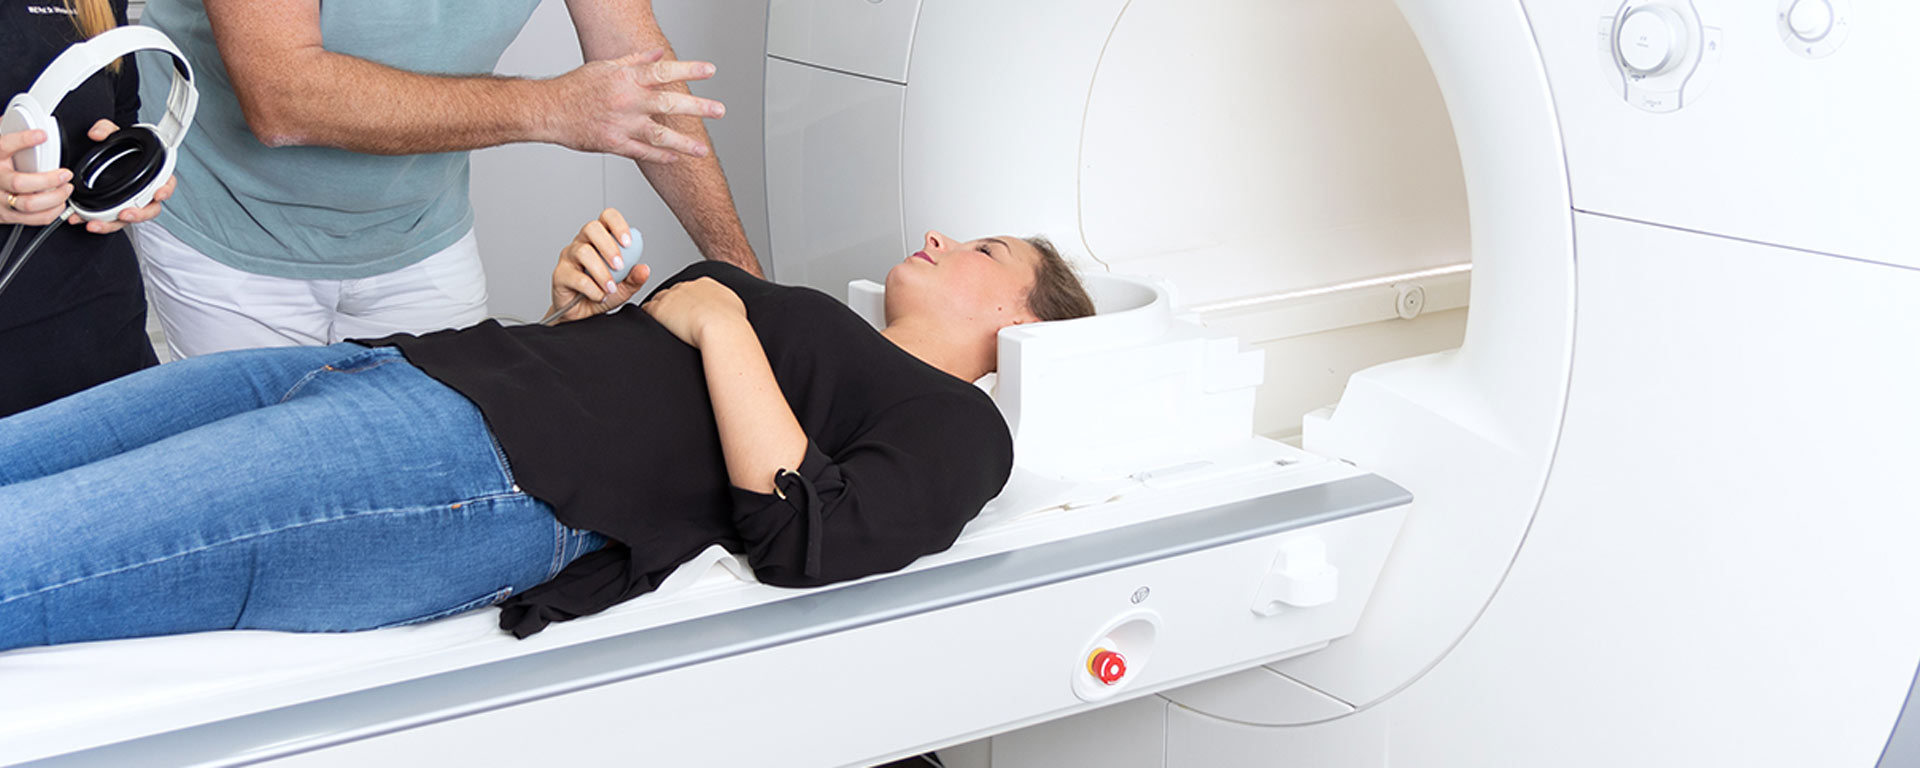 Radiologie, Strahlentherapie und Nuklearmedizin - MVZ Uhlenbrock am St.-Josefs-Hospital - Lukas Klinikum